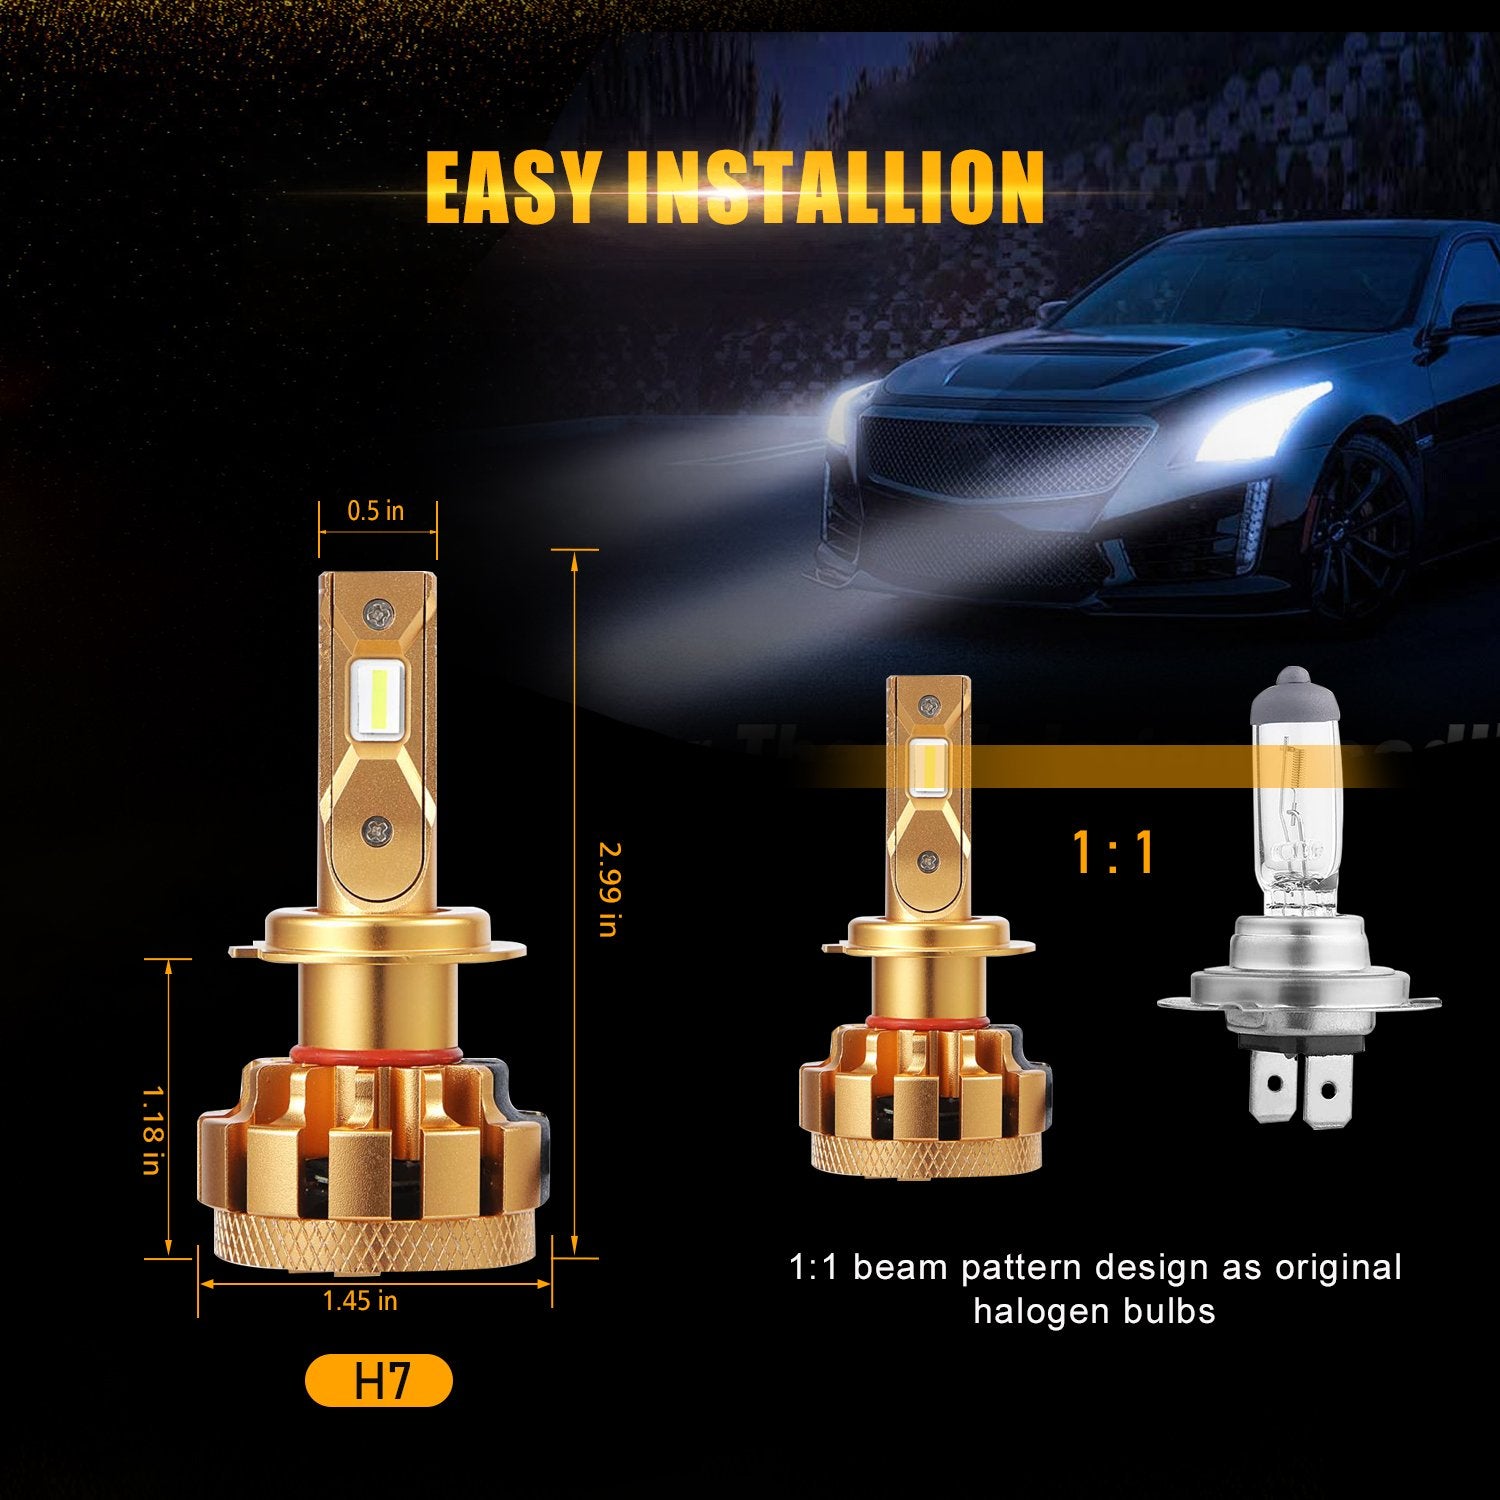 H7 Halogen headlight bulb for cars with H7 bulbs Genuine Mercedes